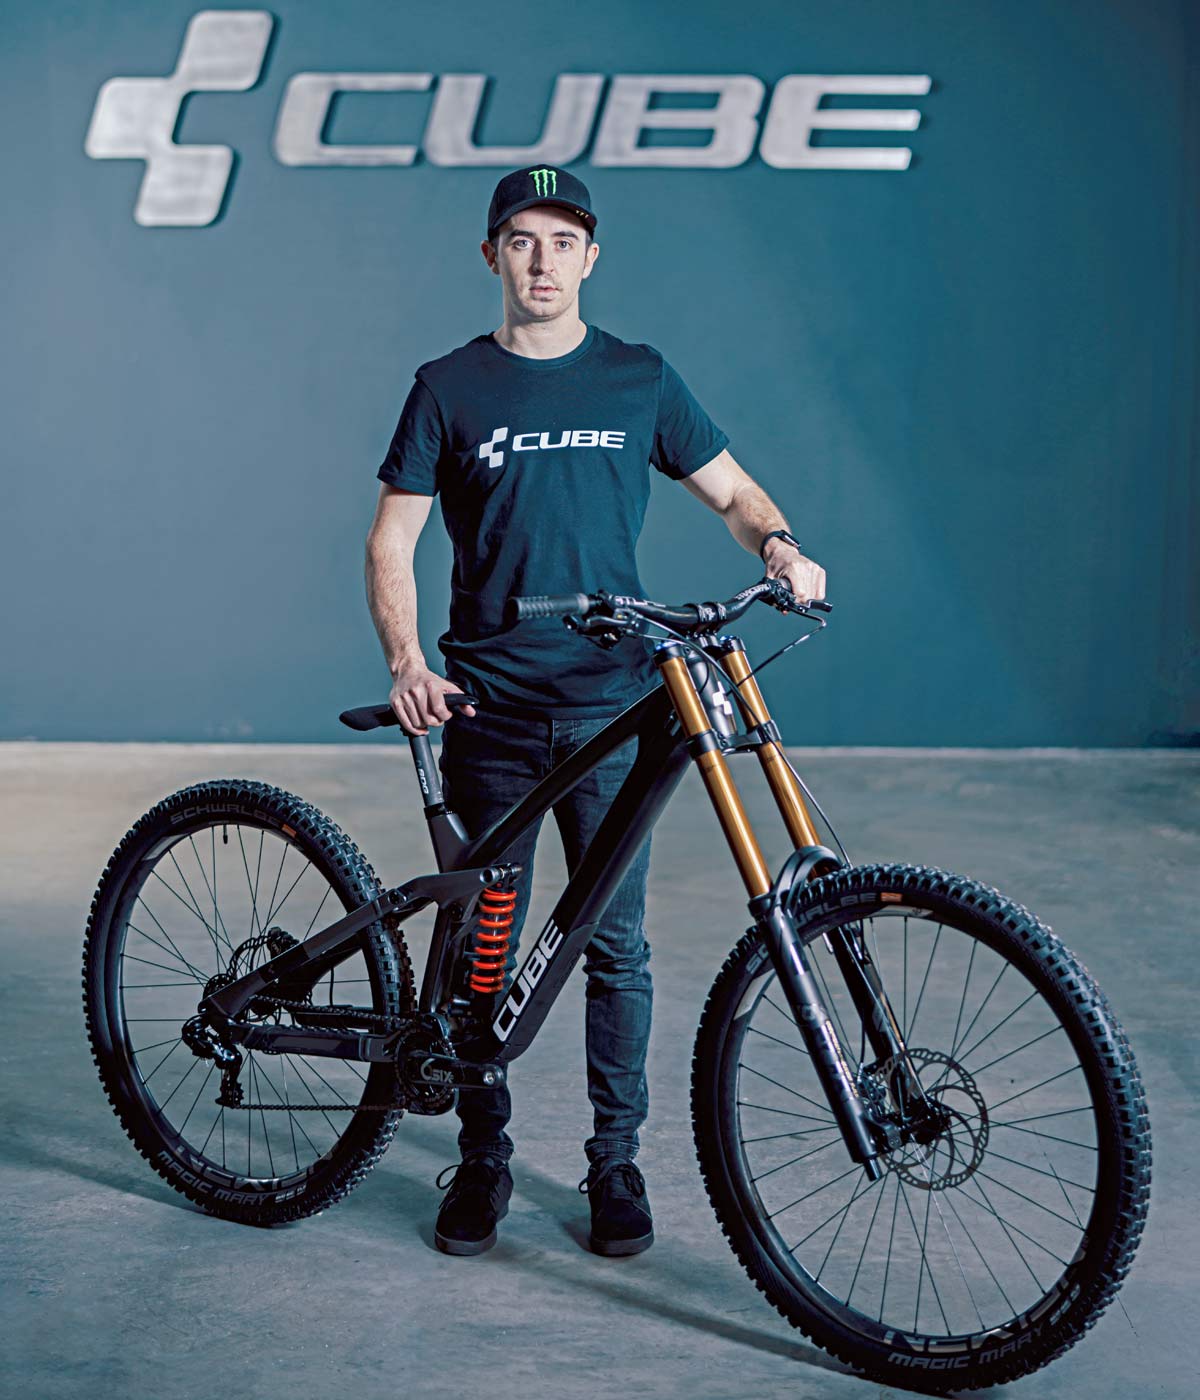 2021 Cube Two15 HPC carbon 29er downhill mountain bike, Danny Hart presentation